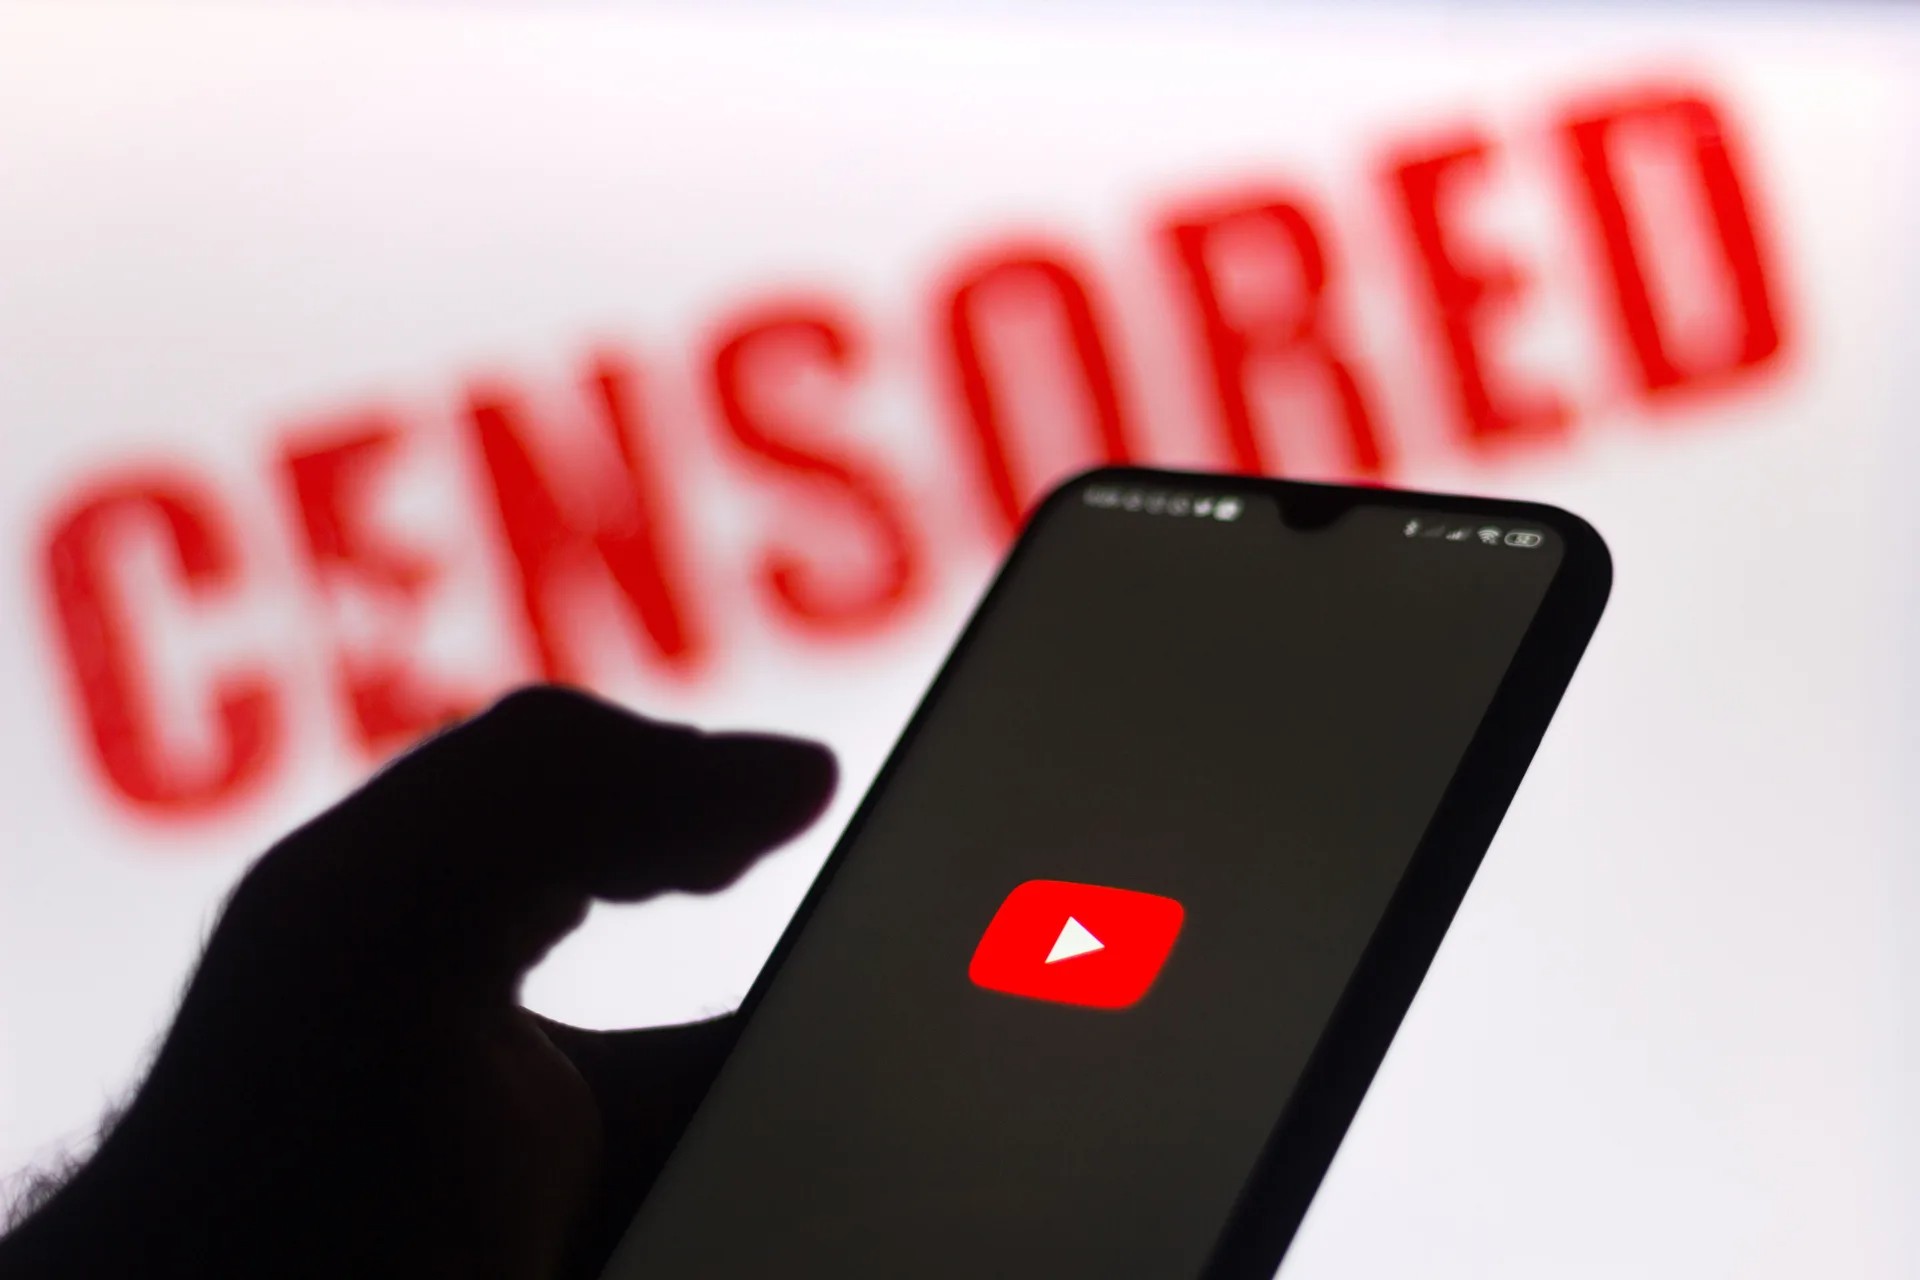 Grafički i simbolički prikaz cenzure na Jutjubu (Foto: Rafael Henrique/SOPA Images/Lightrocket via Getty Images)